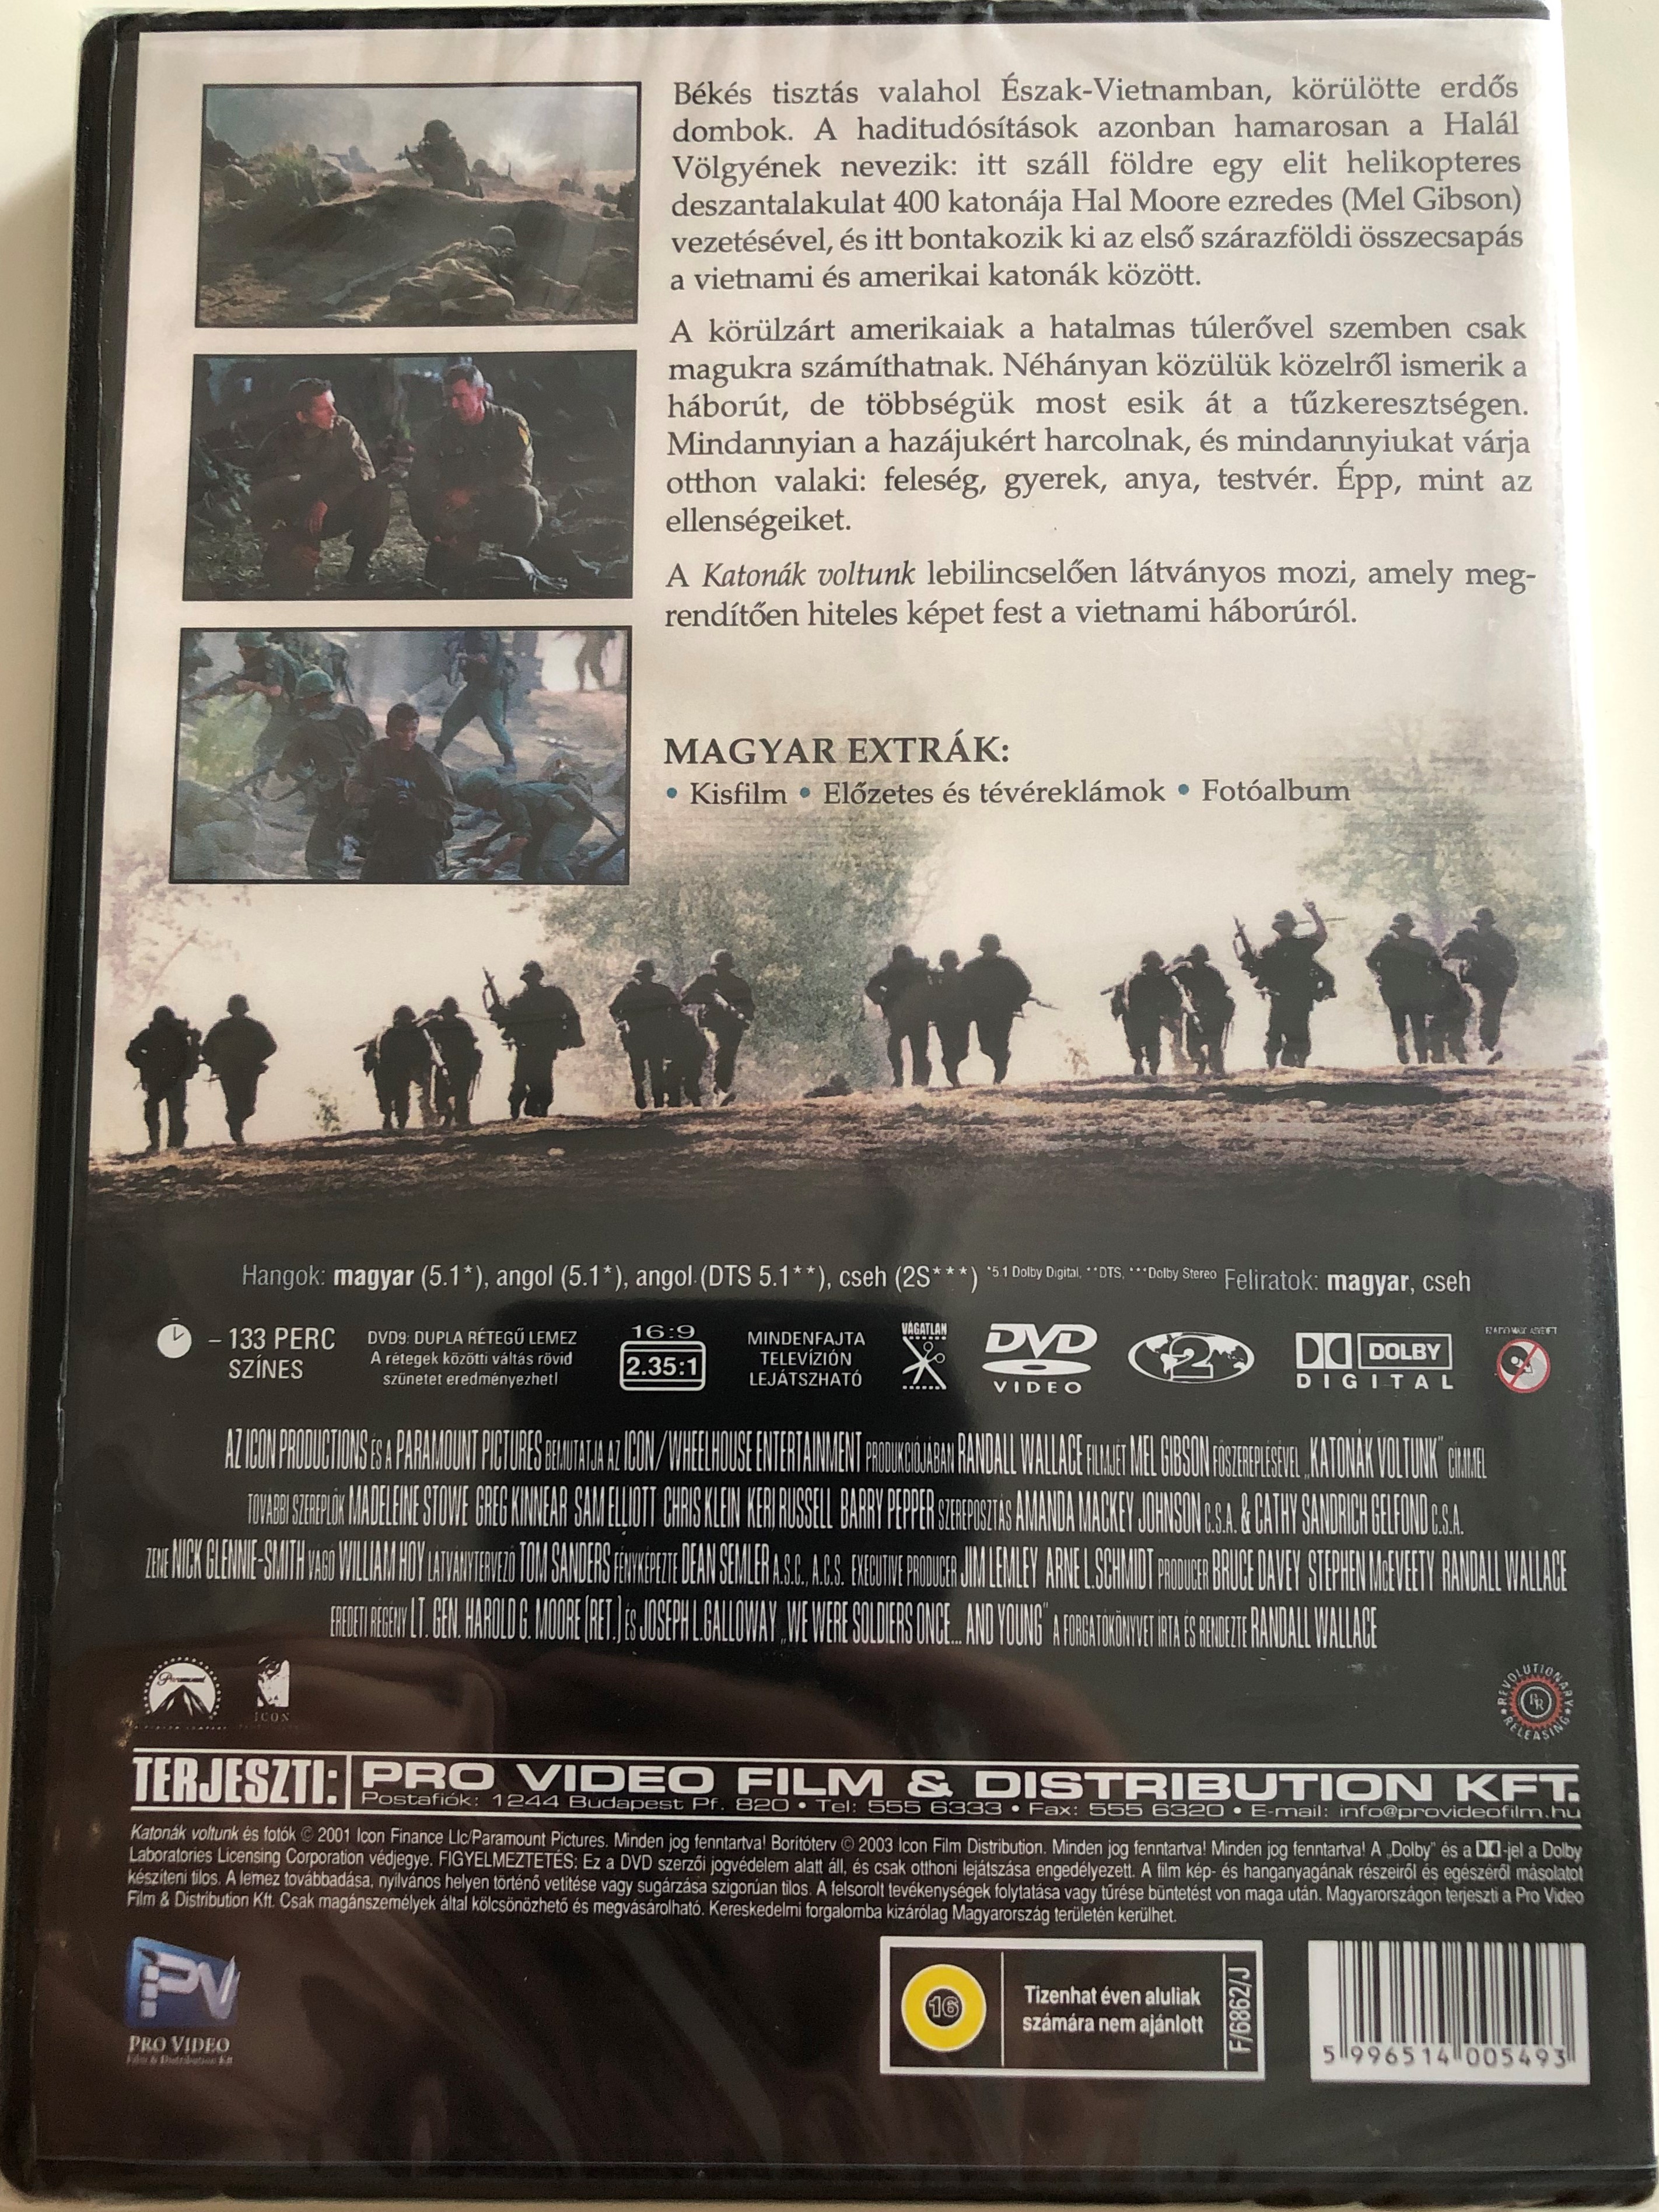 we-were-soldiers-dvd-2001-katon-k-voltunk-directed-by-randall-wallace-starring-mel-gibson-madeleine-stowe-greg-kinnear-sam-elliott-chris-klein-2-.jpg